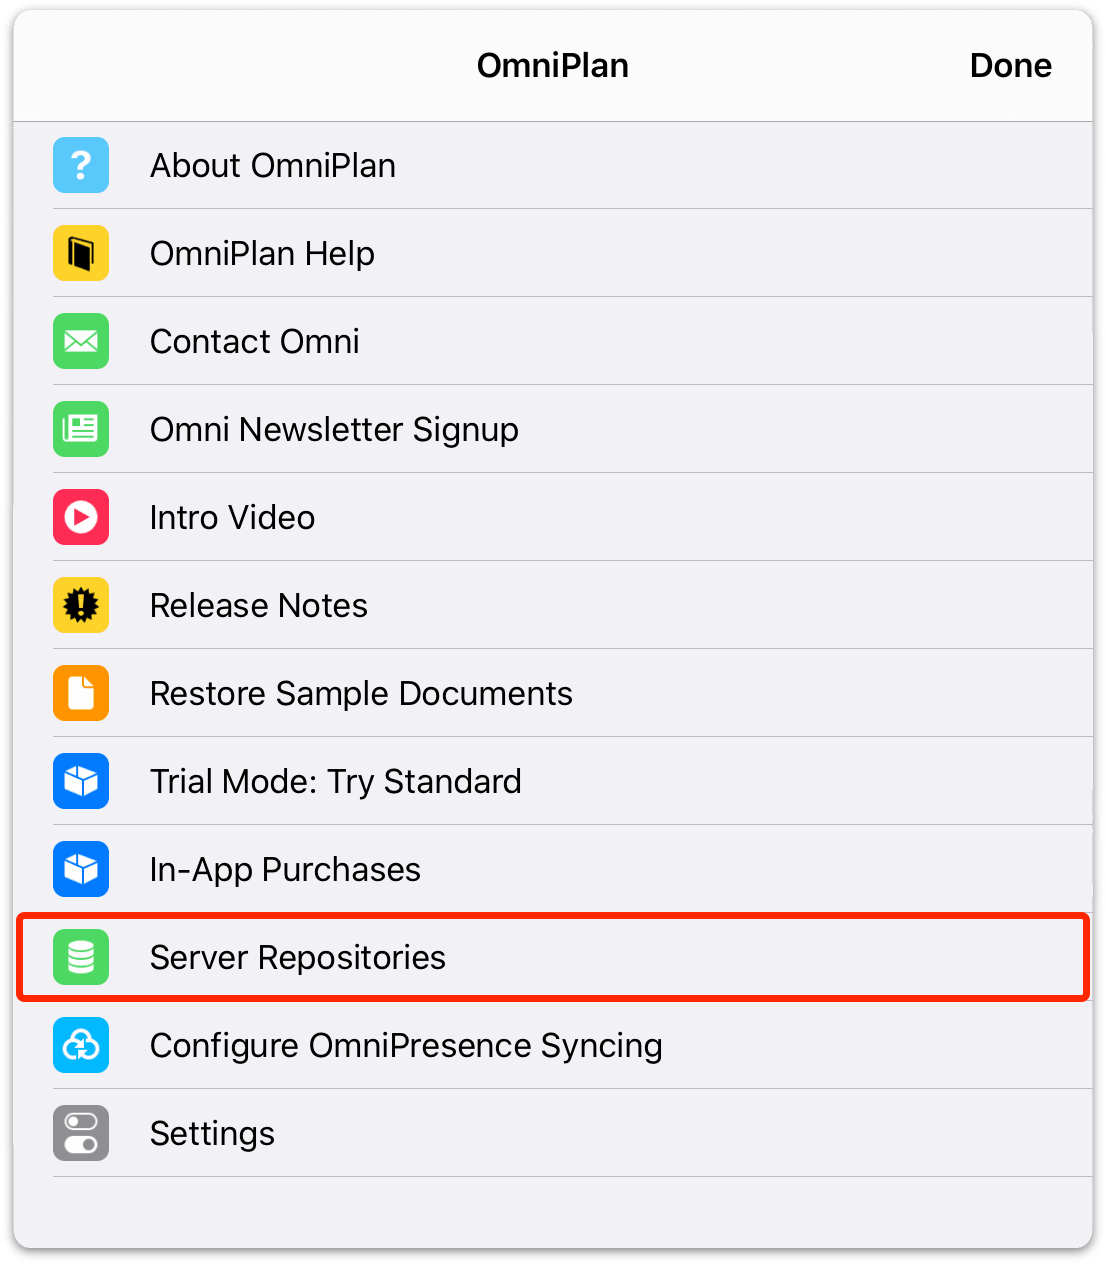 The Server Repositories item in the App Menu